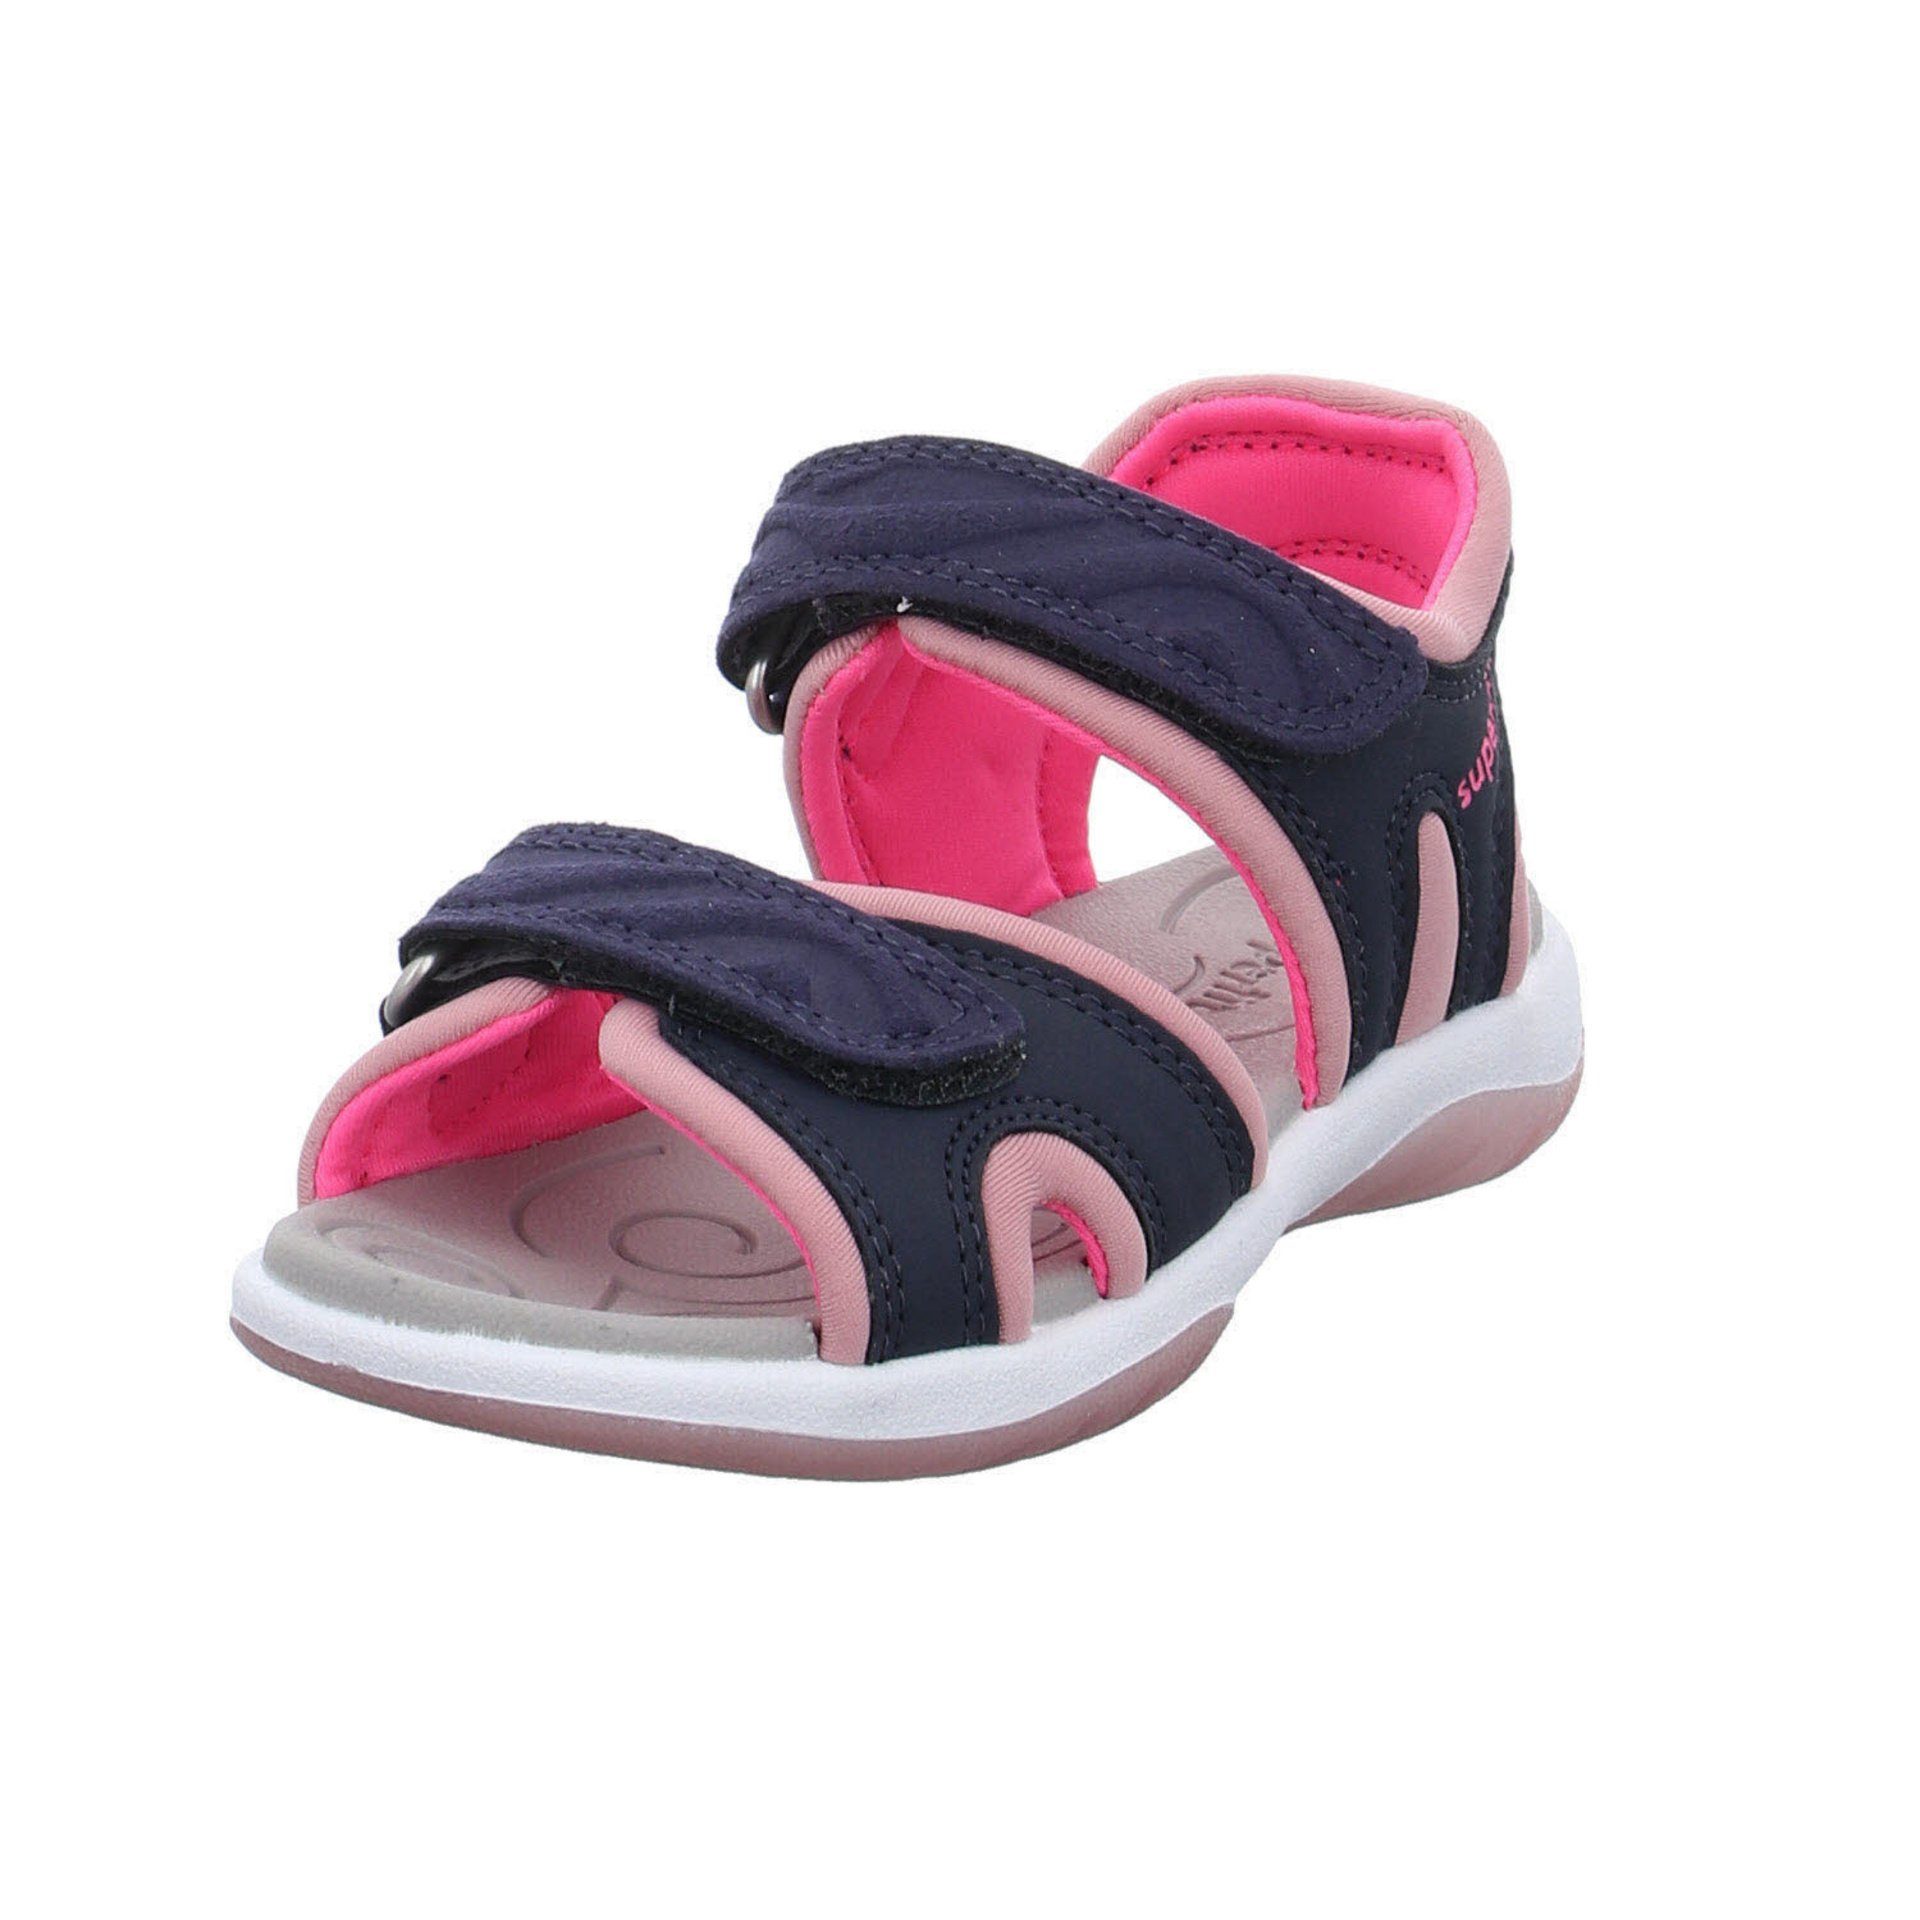 Superfit »Mädchen Sandalen Schuhe Sunny Sandale Kinderschuhe« Sandale  Synthetikkombination online kaufen | OTTO